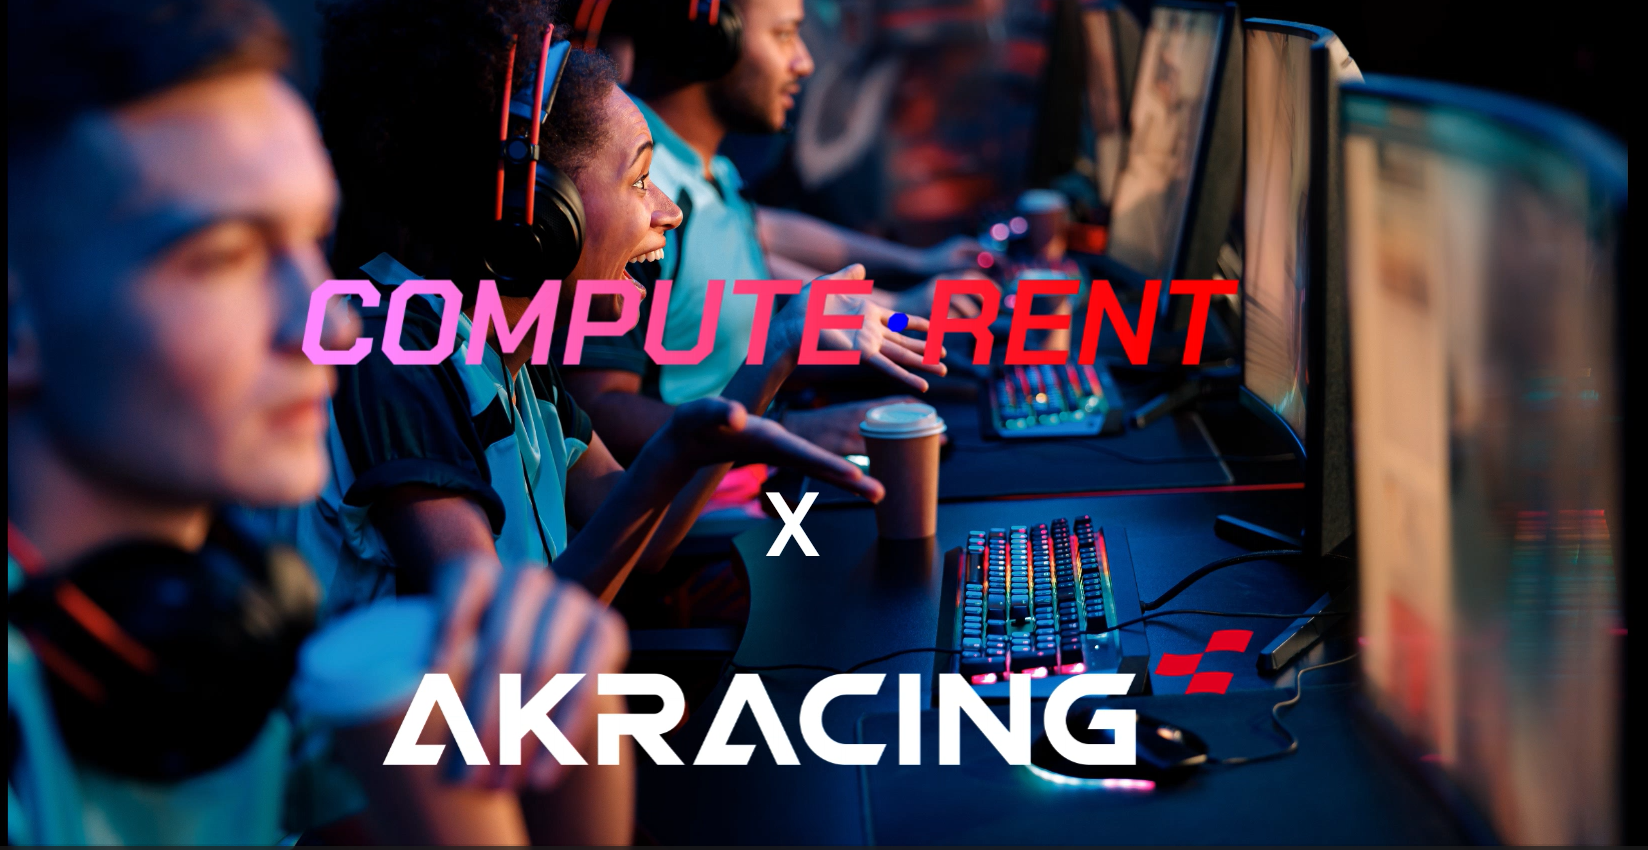 Partenariat computerent ak racing